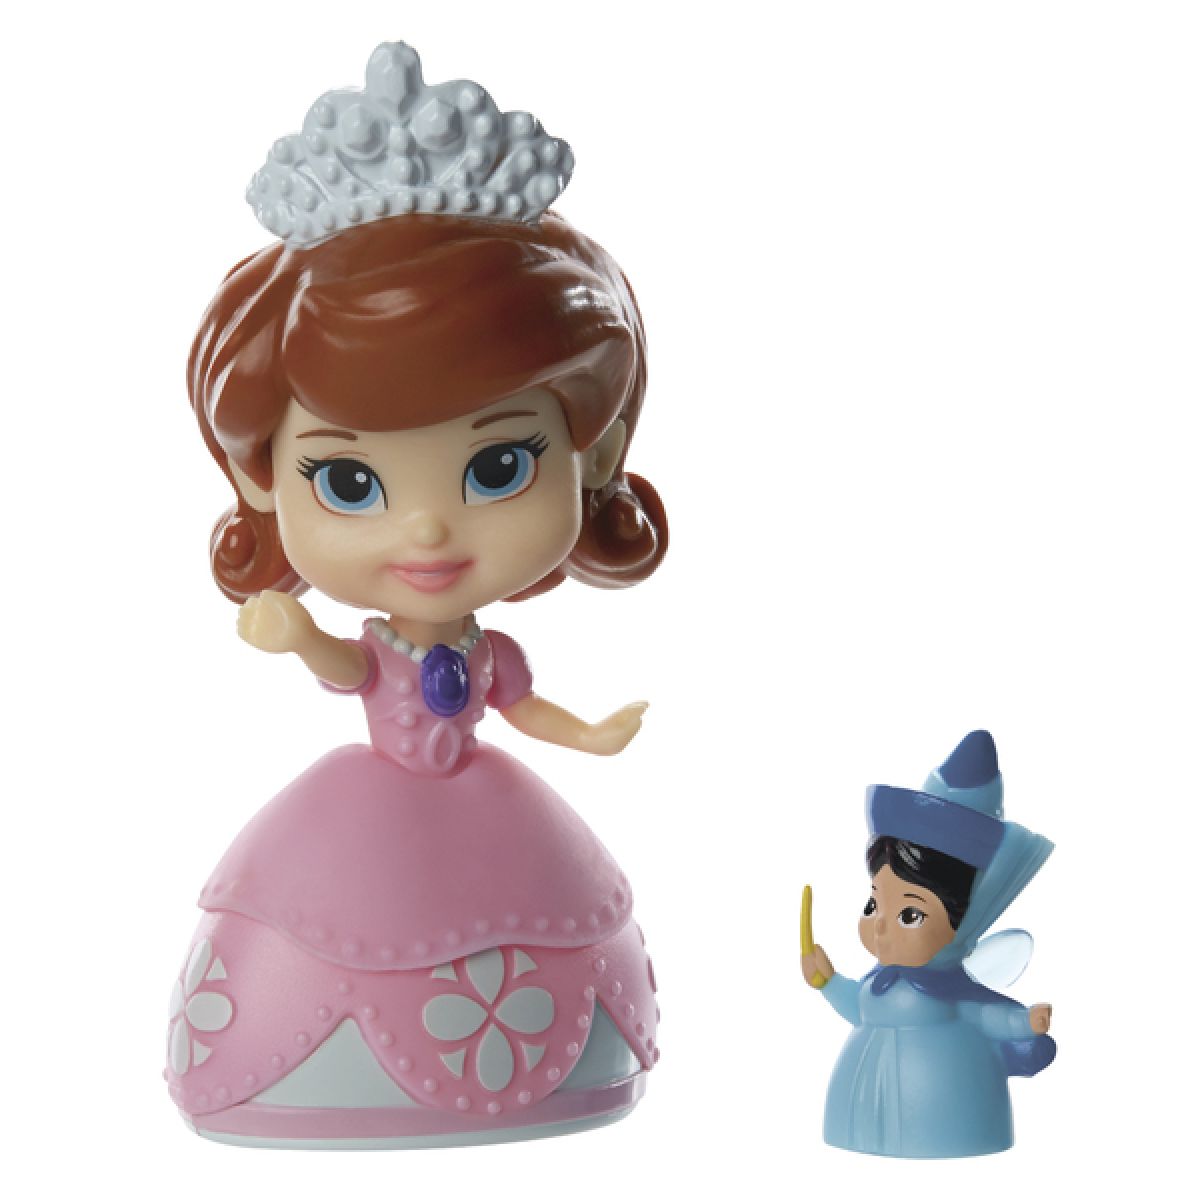 Jakks Pacific Disney Mini princezna a kamarád - Sofia and Merryweather